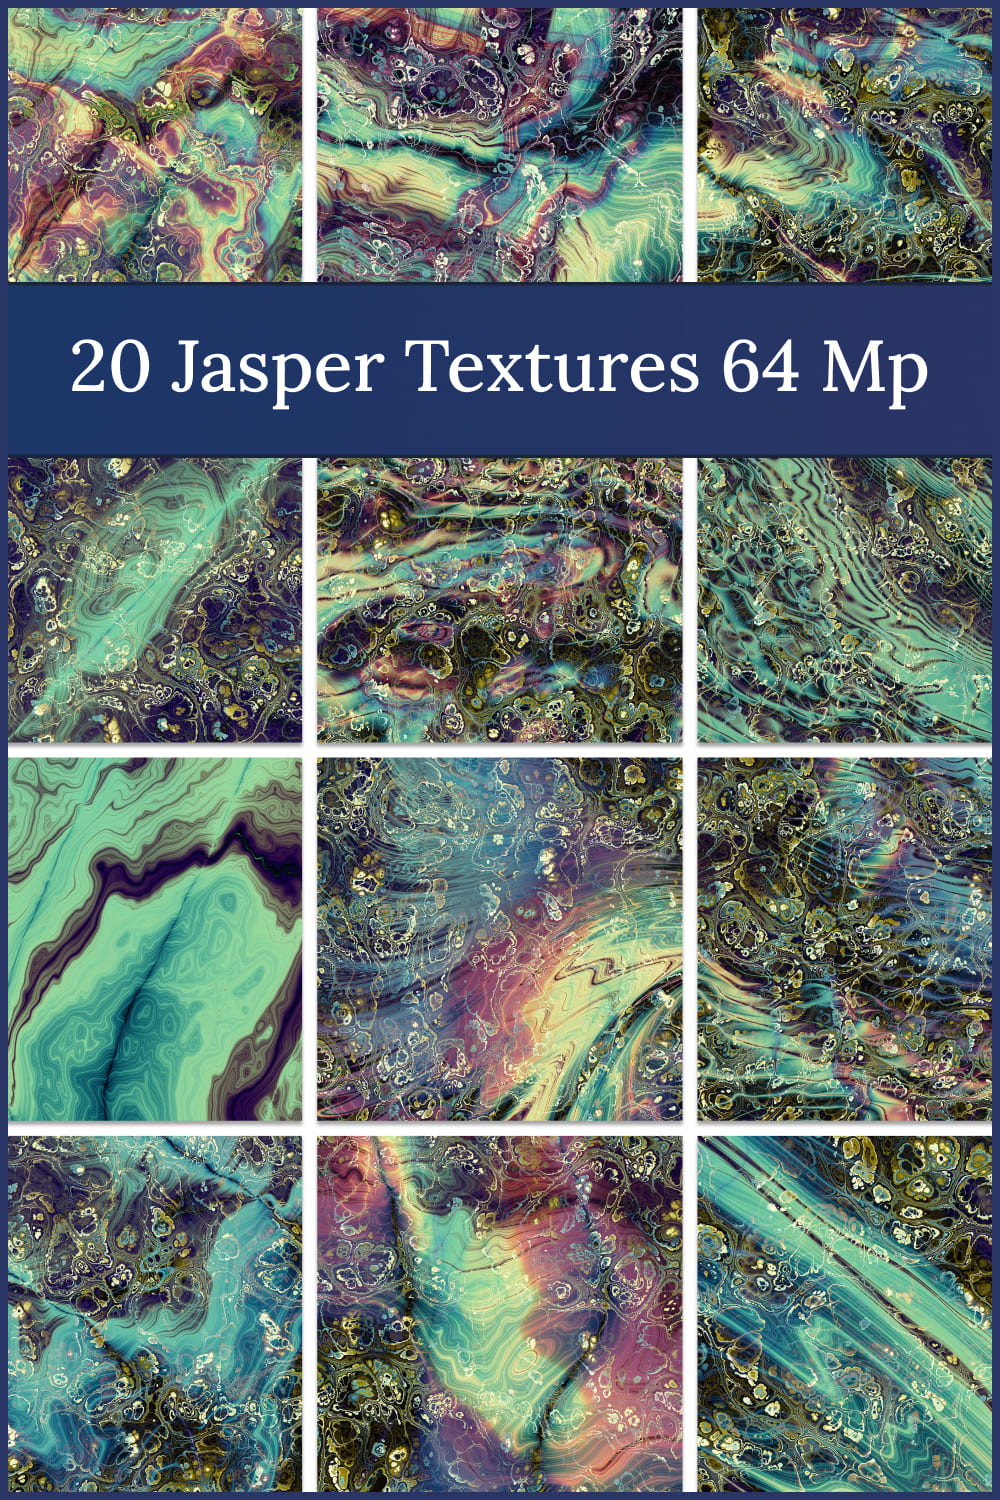 20 jasper textures 64 mp - pinterest image preview.